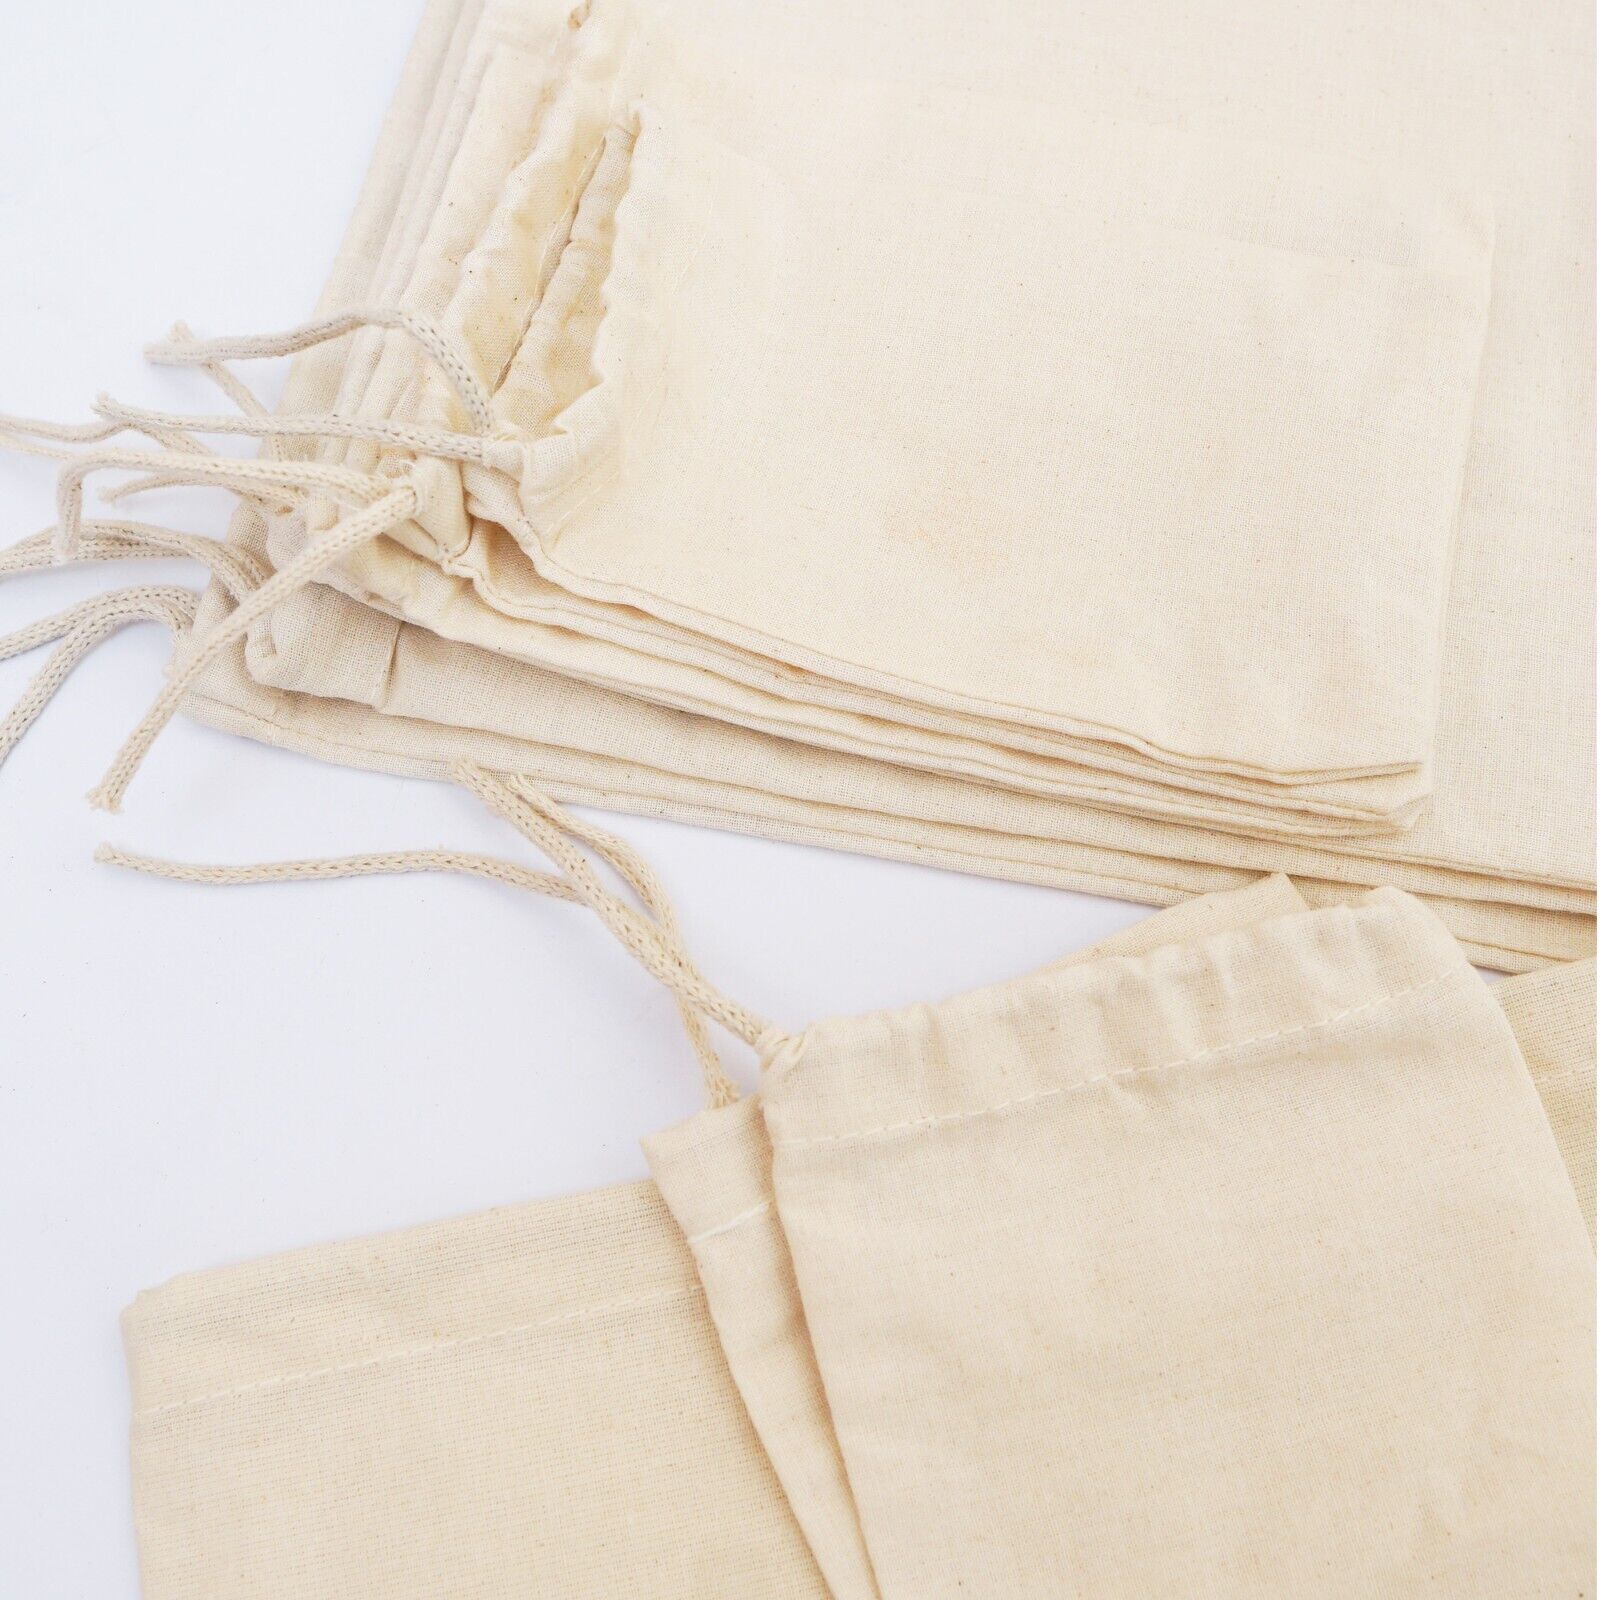 5 x 7 Inches 100% Cotton Reusable Storage Premium Quality Single Drawstring Bags